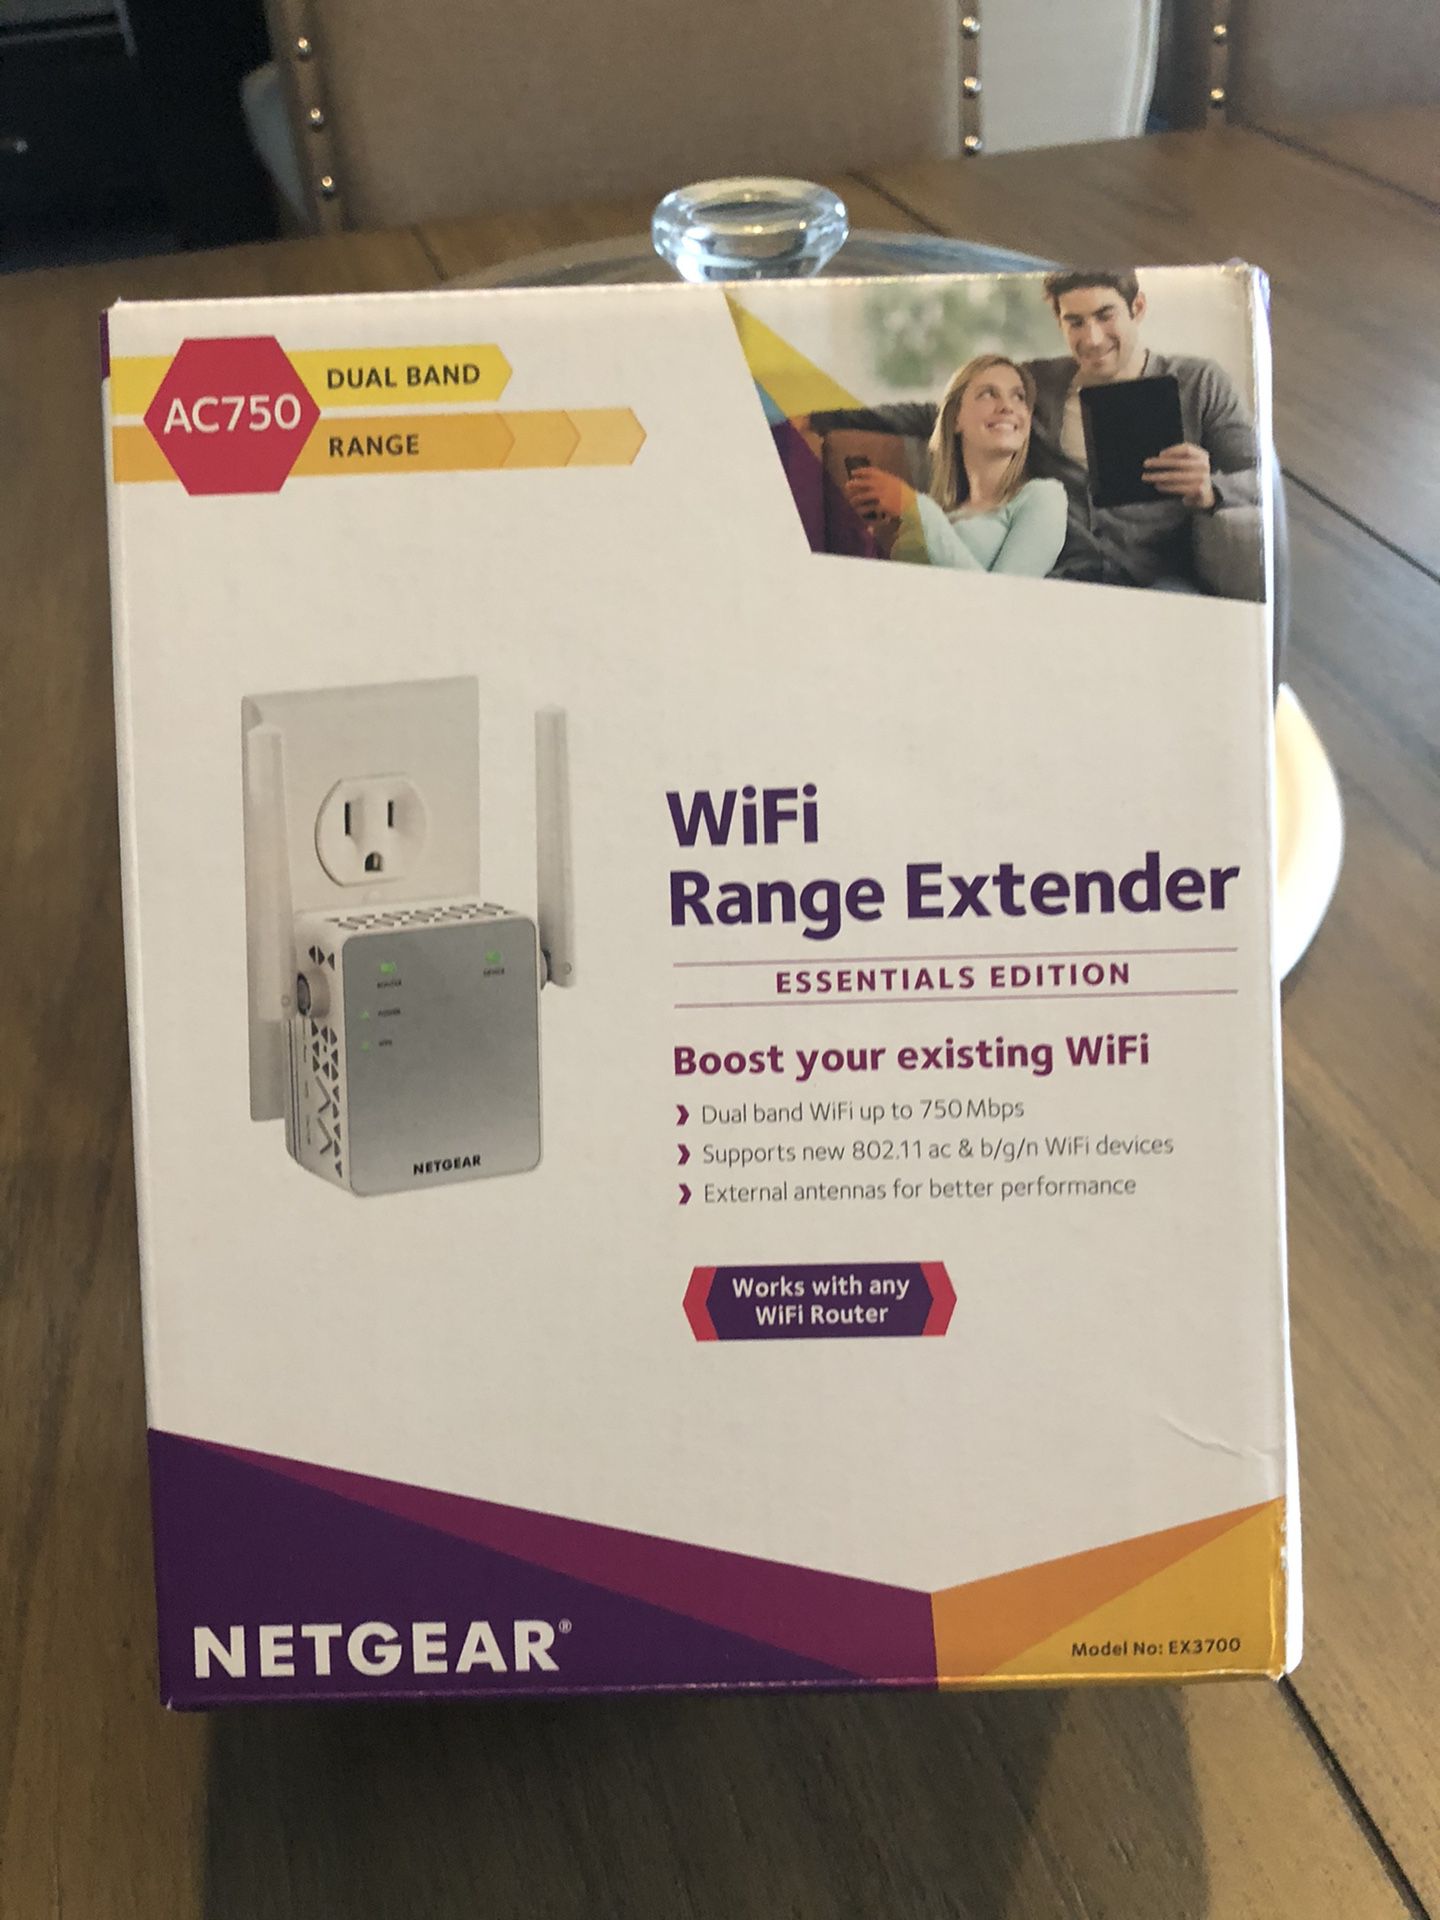 Netgear wifi extender model EX3700